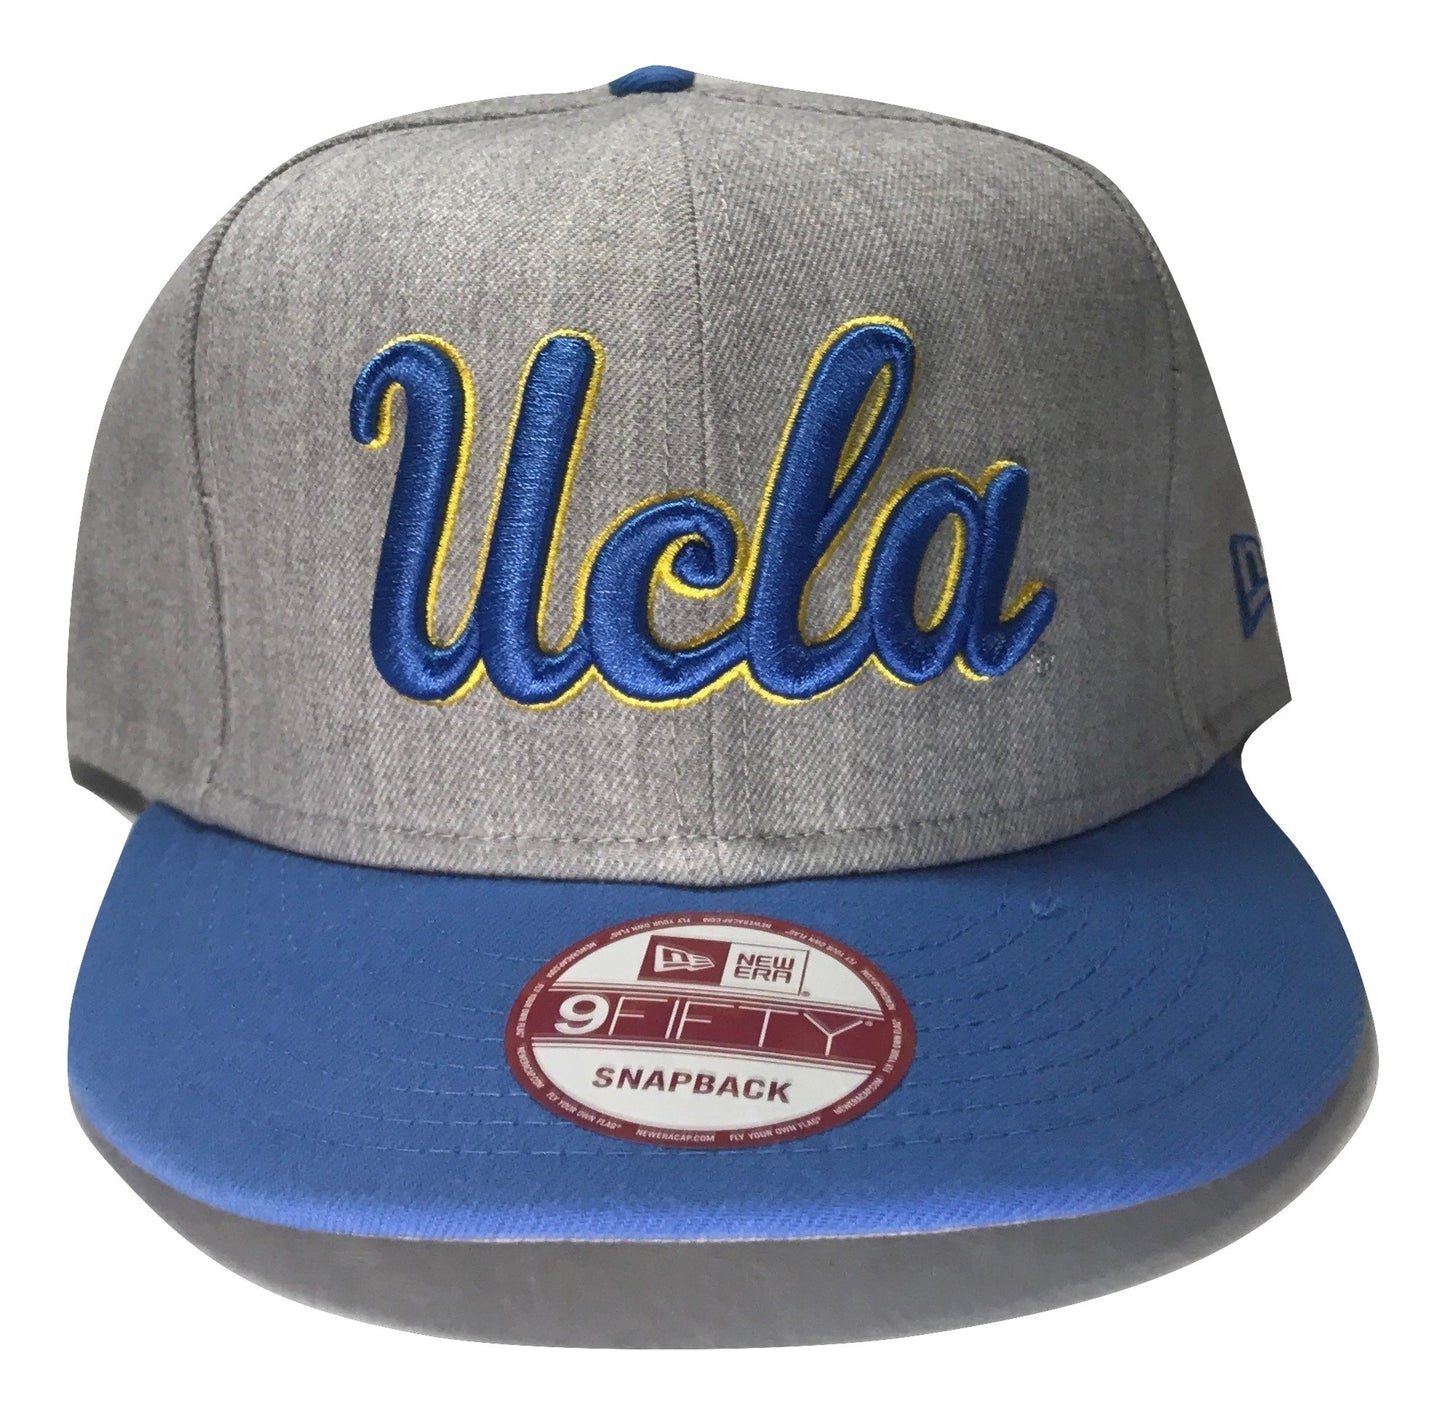 UCLA Bruins (Grey) Snapback